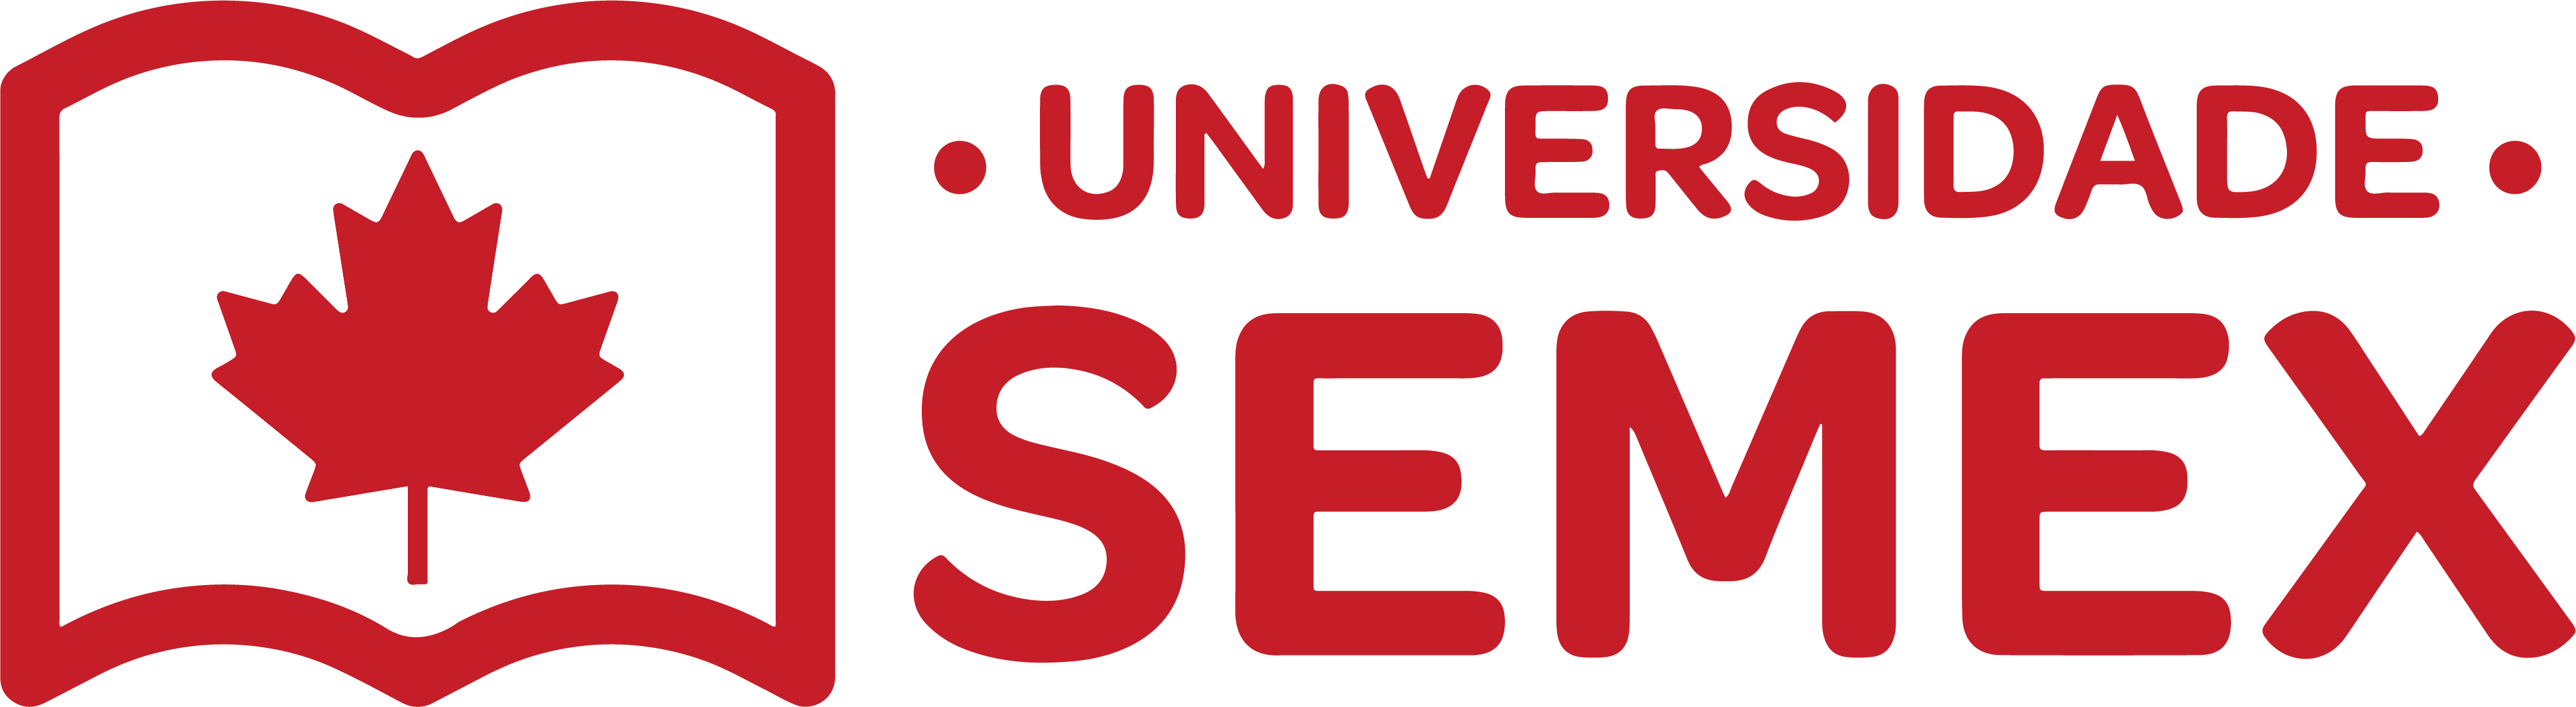 Universidade Corporativa Semex